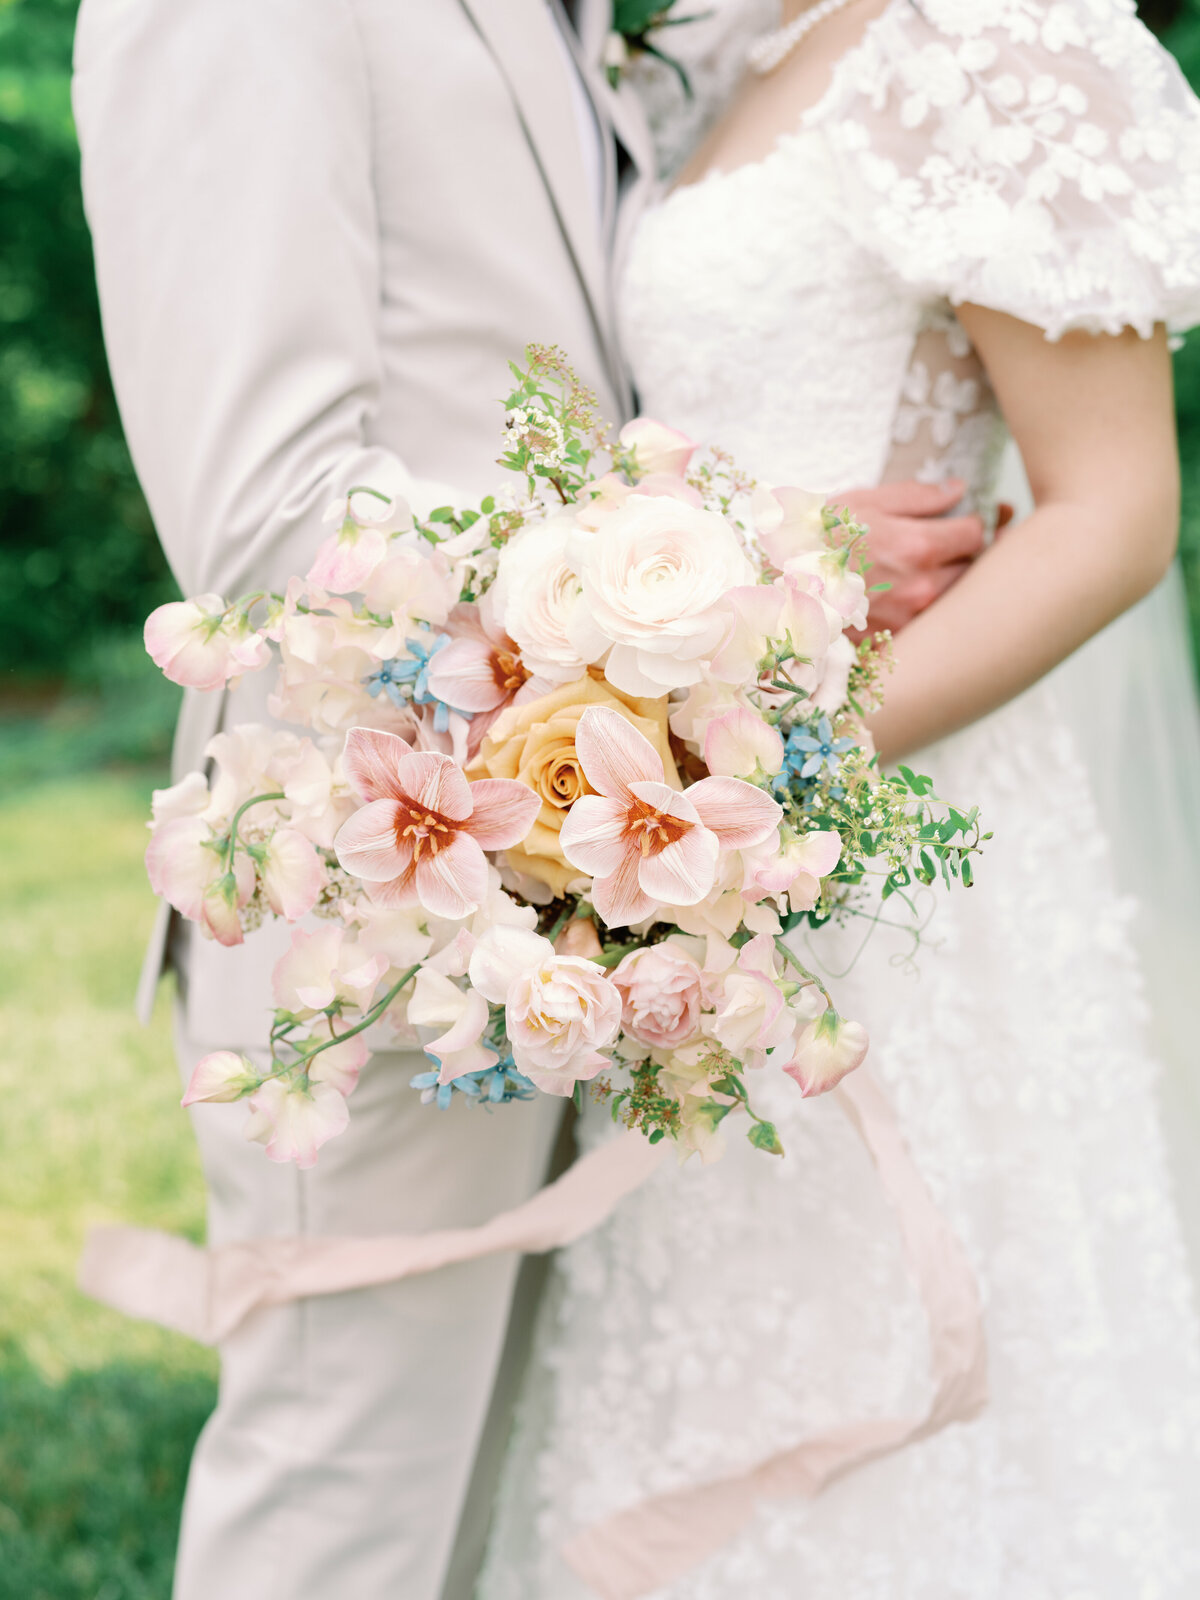 Sarah Rae Floral Designs Wedding Event Florist Flowers Kentucky Chic Whimsical Romantic Weddings24